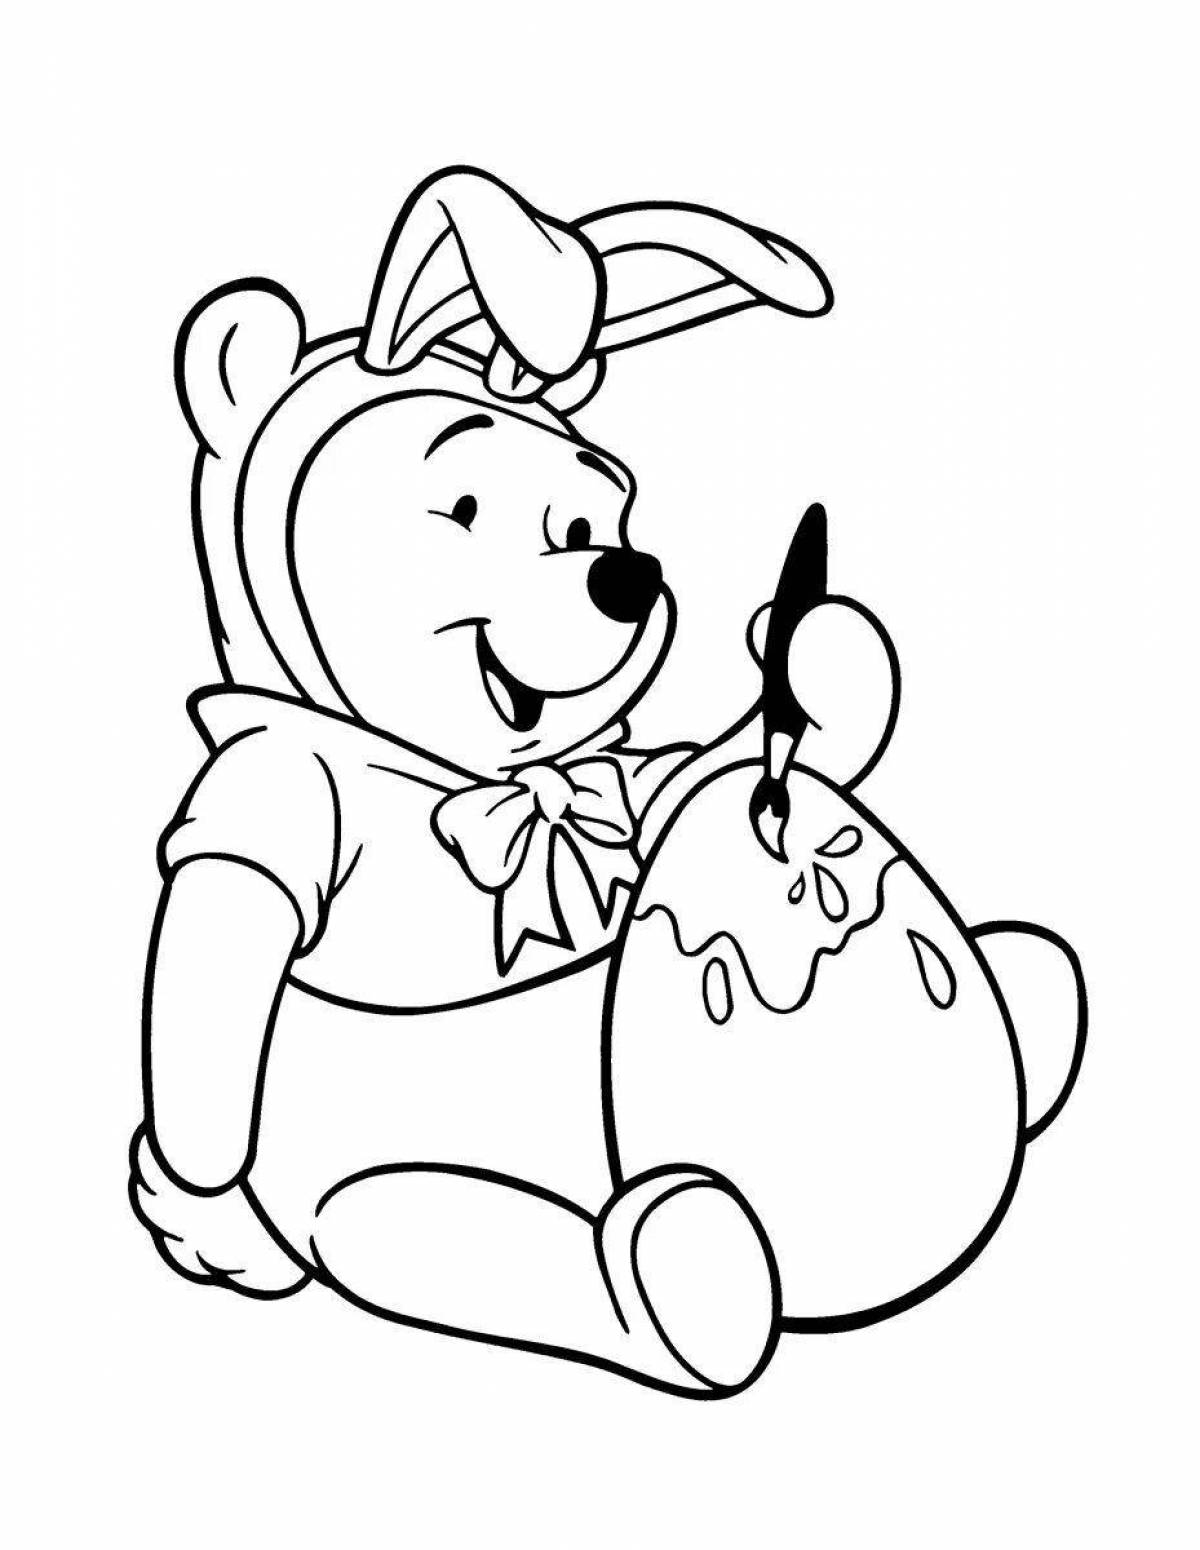 Winnie's fun coloring